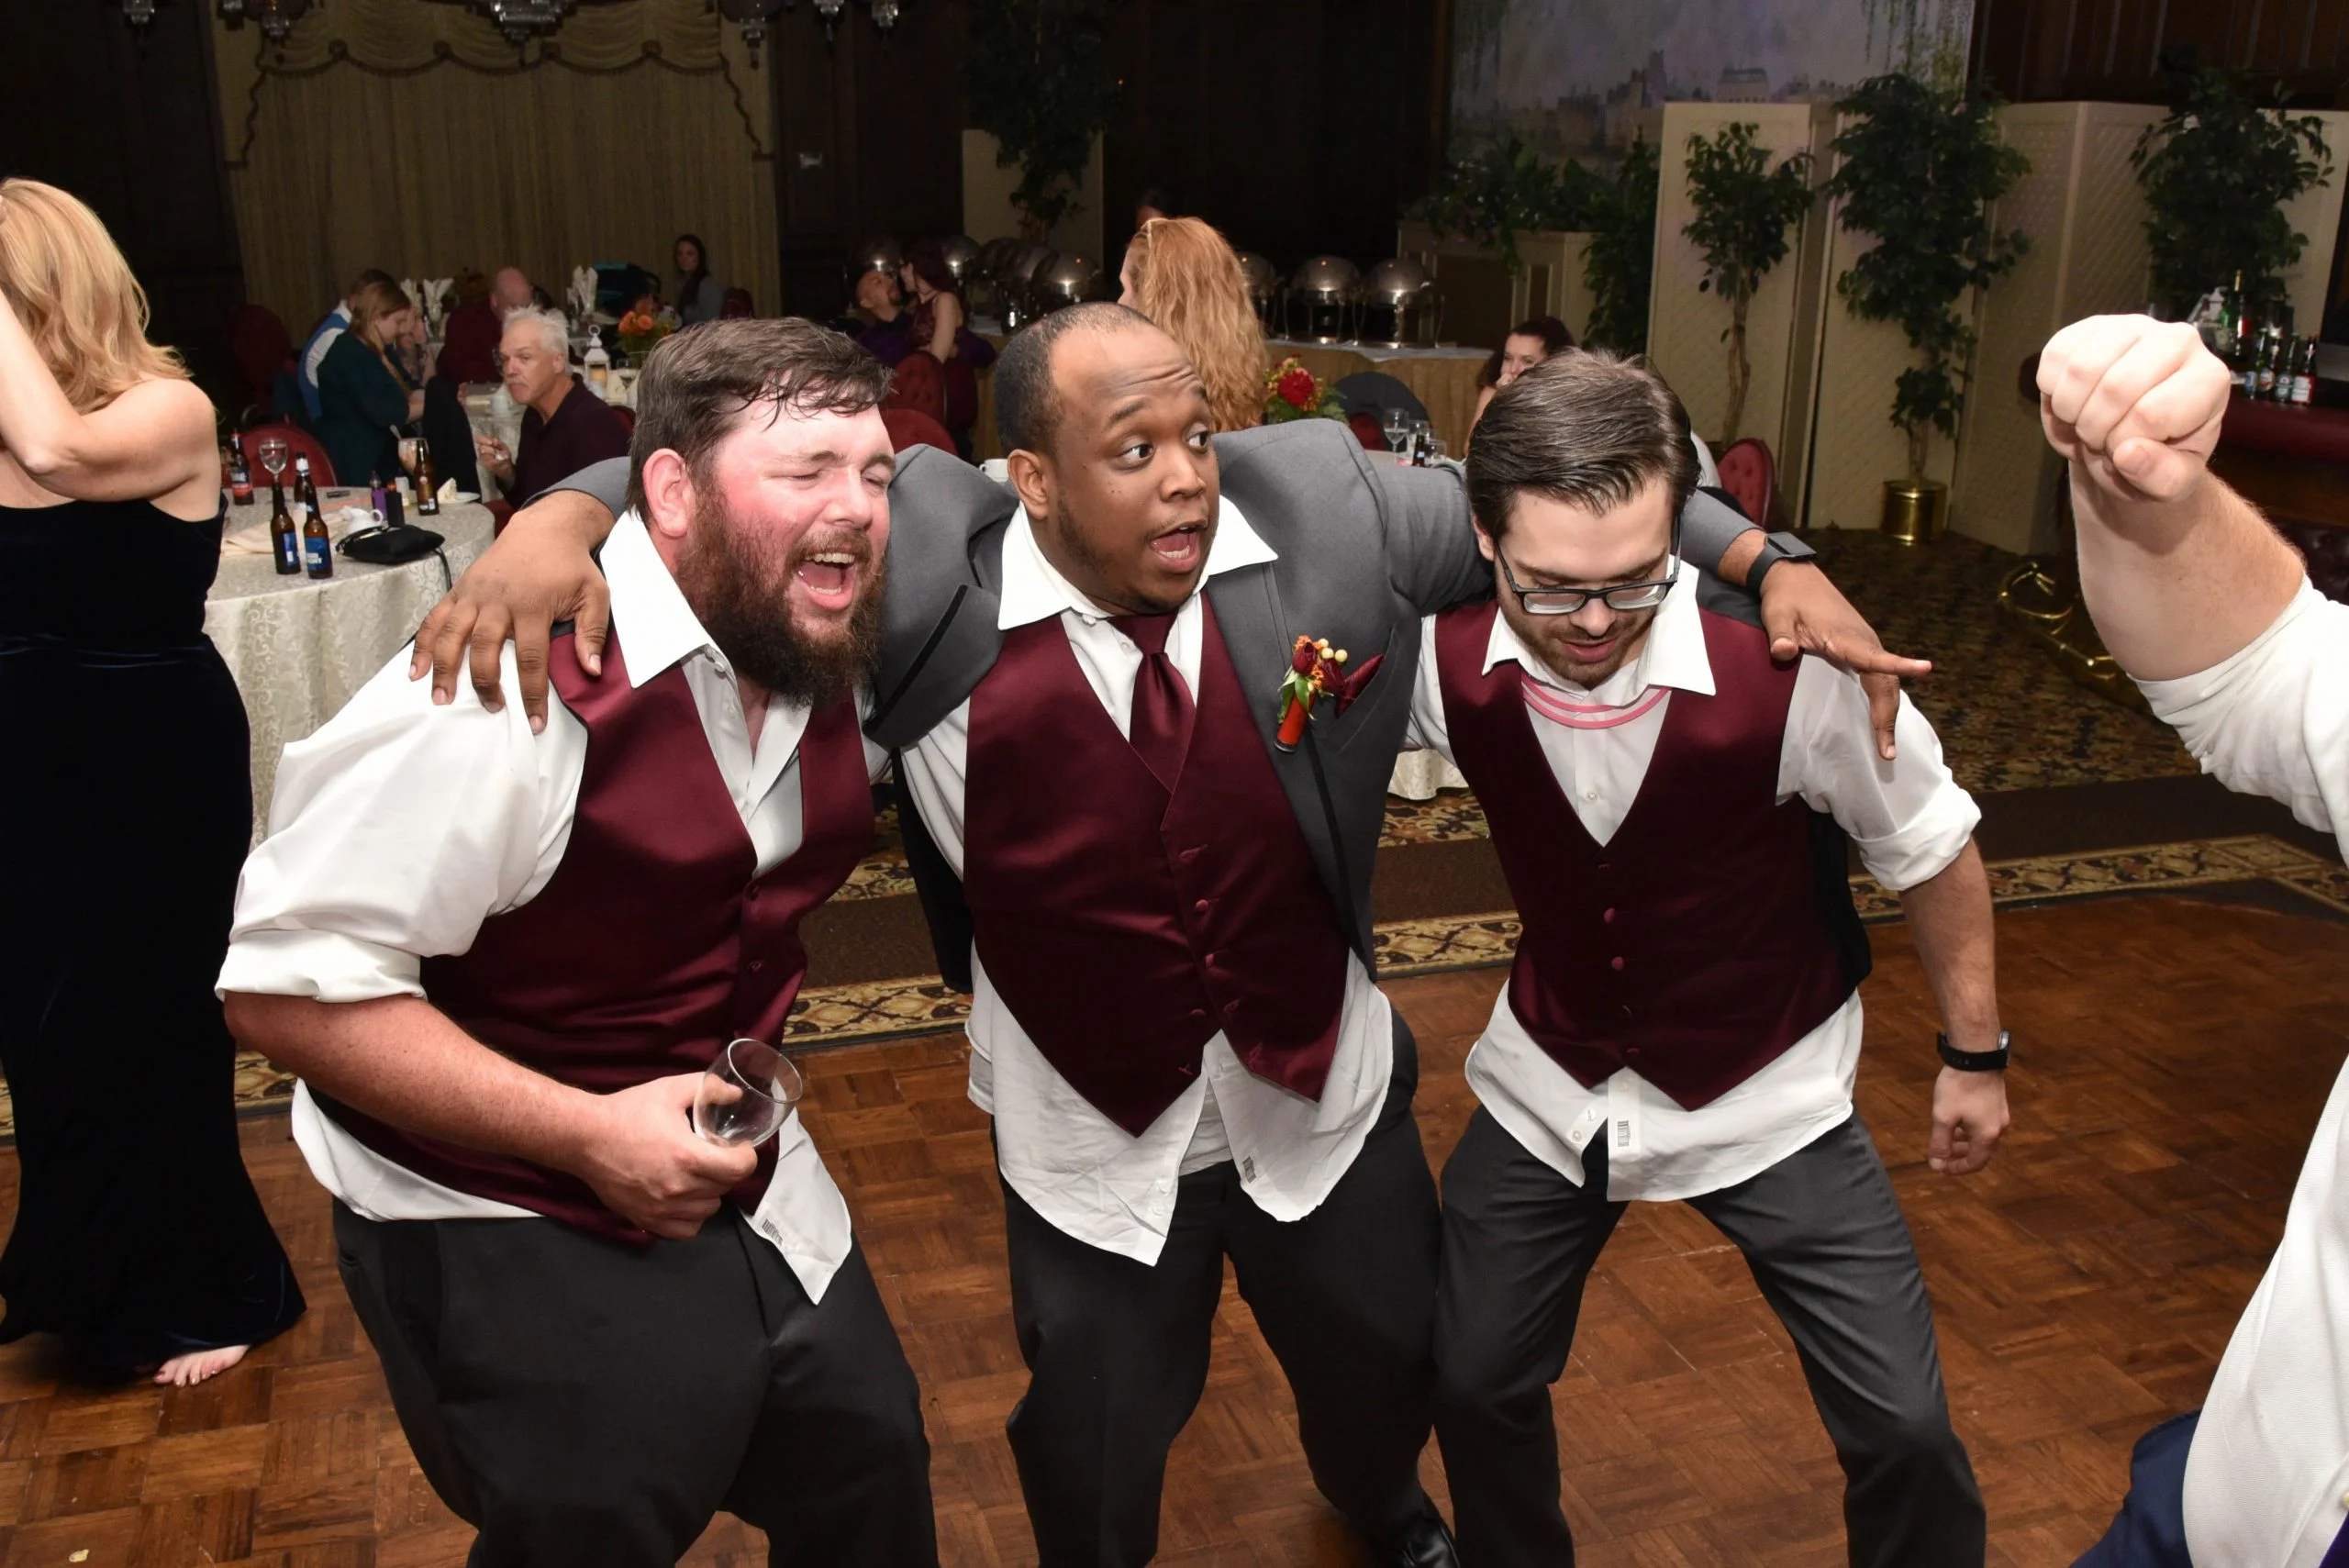 Birchwood Manor dancing groomsmen